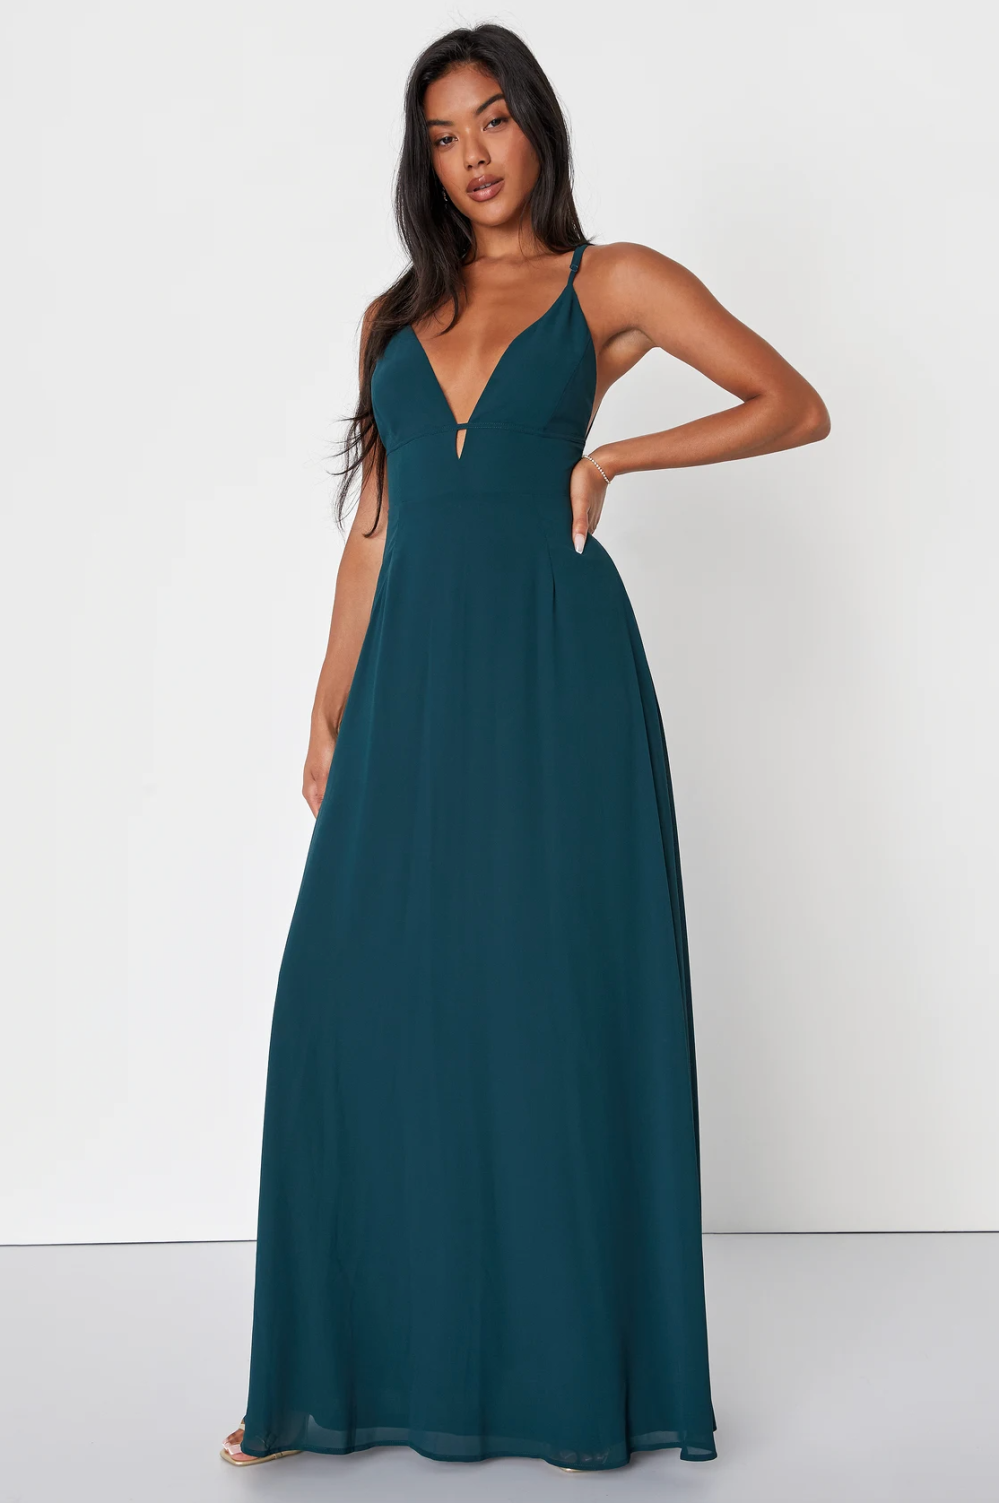 Lulu's Irresistible Elegance Emerald Green Backless Strap Maxi Dress